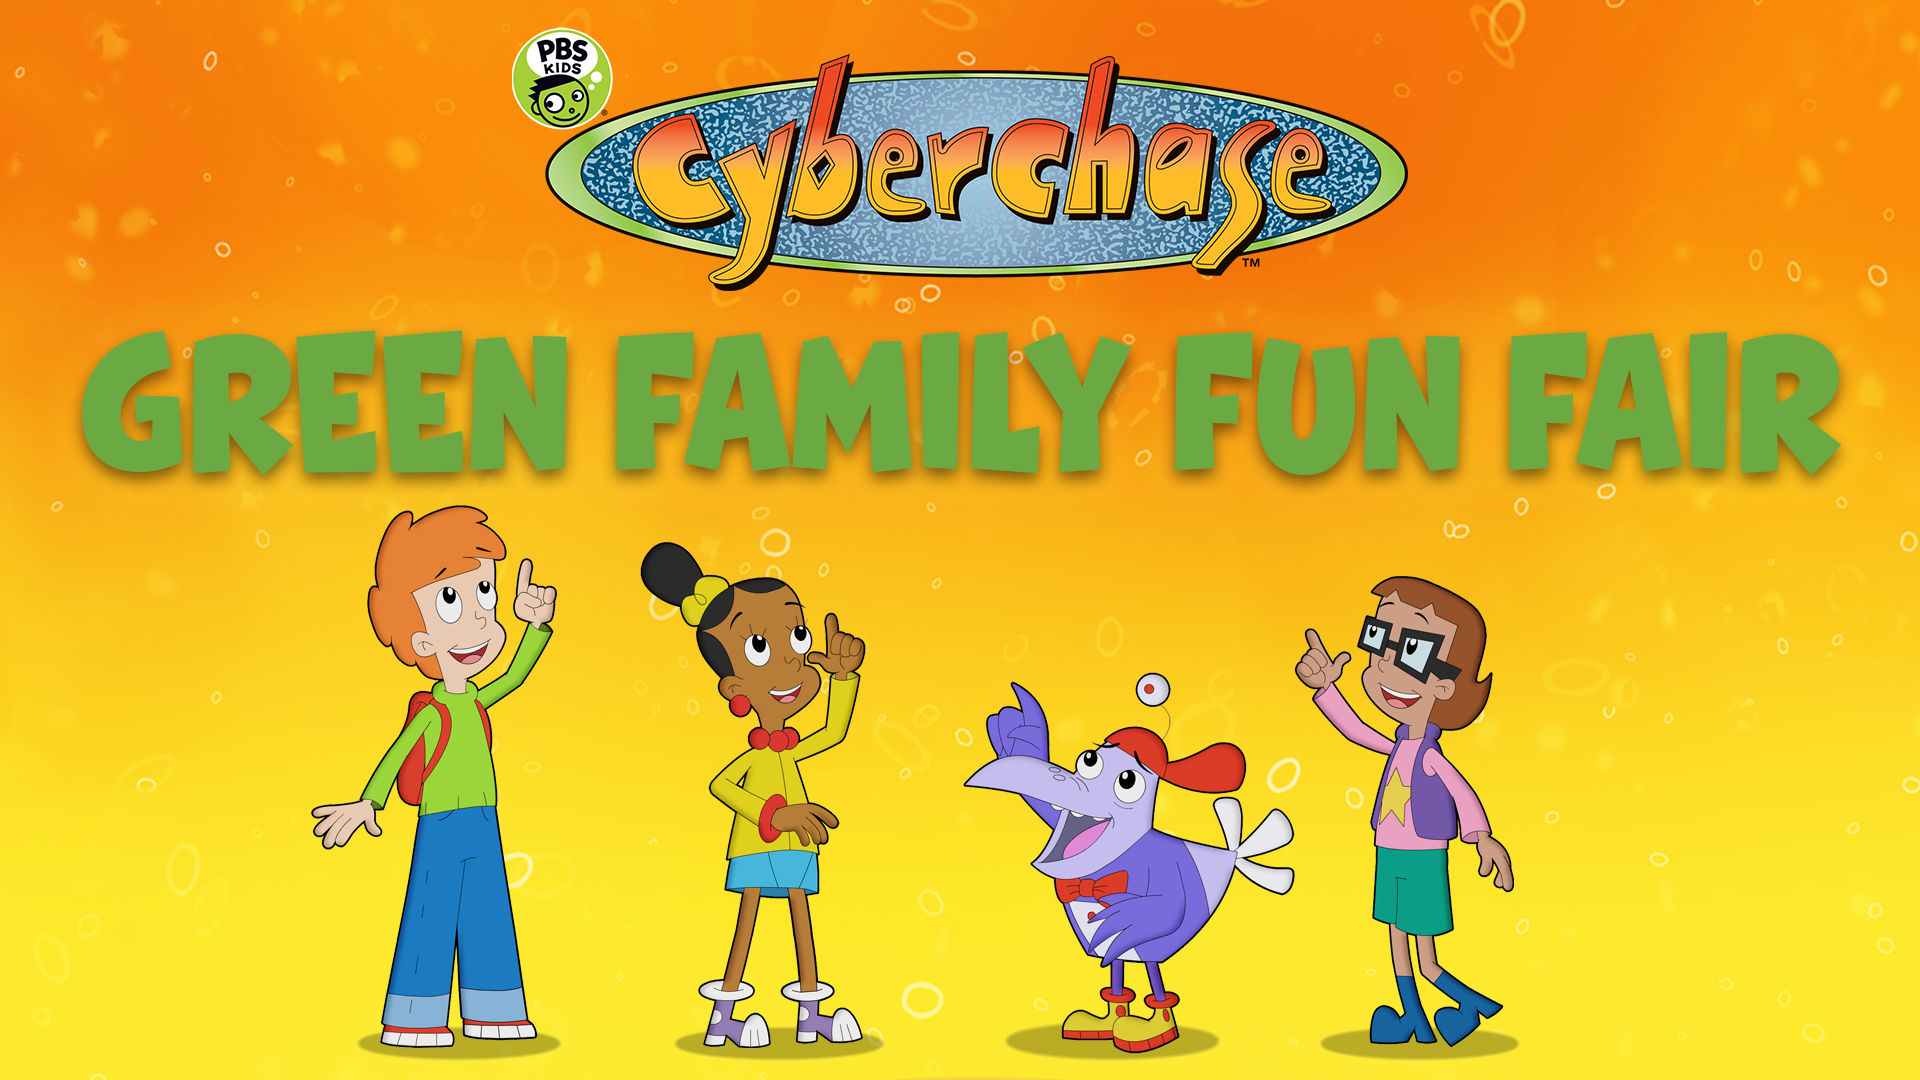 Cyberchase Green Family Fun Fair